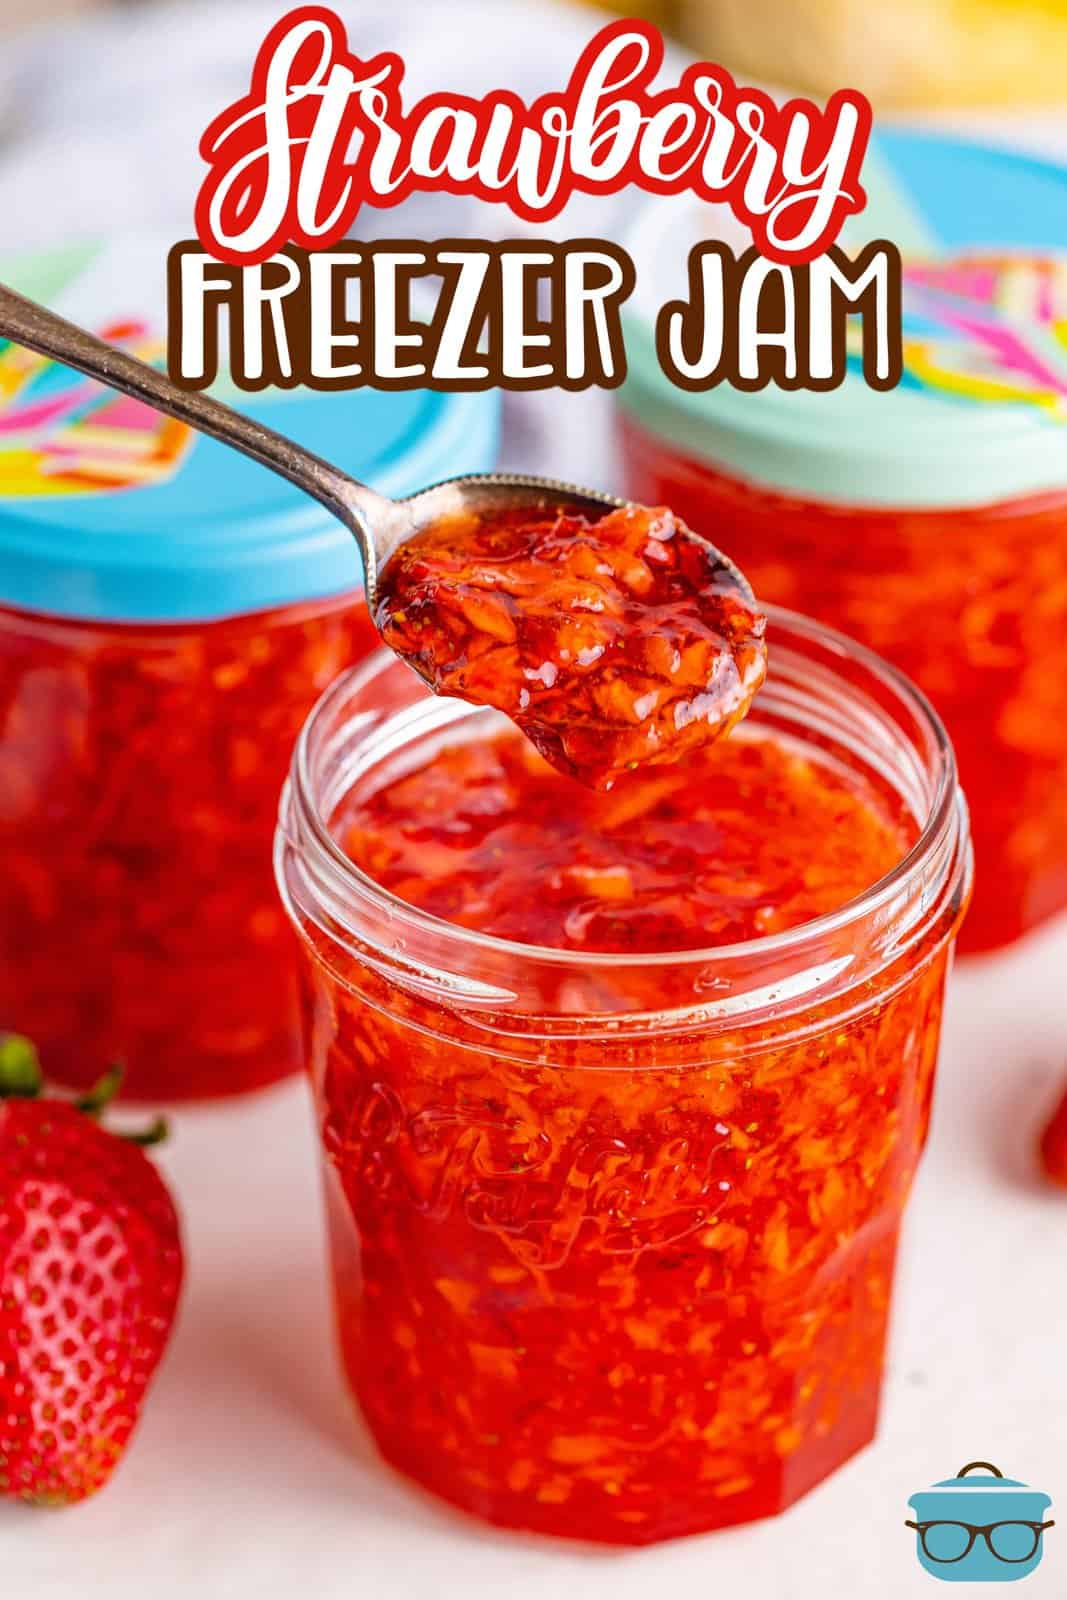 A jar of homemade strawberry freezer jam with a spoon.